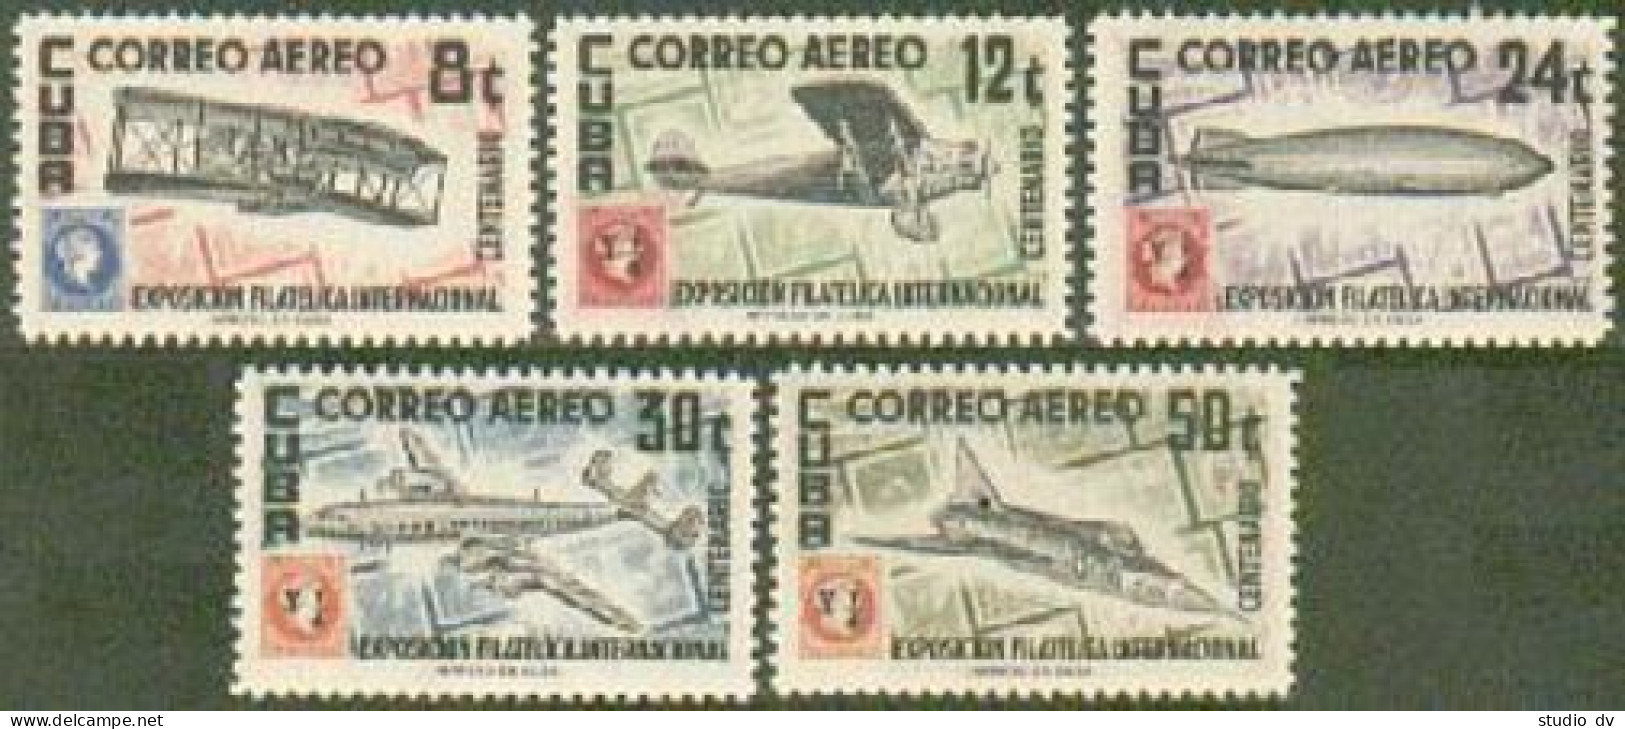 Cuba C122-C126,hinged.Michel 467-471. HAVANA-1955,Airplanes,Zeppelin,Planes. - Neufs